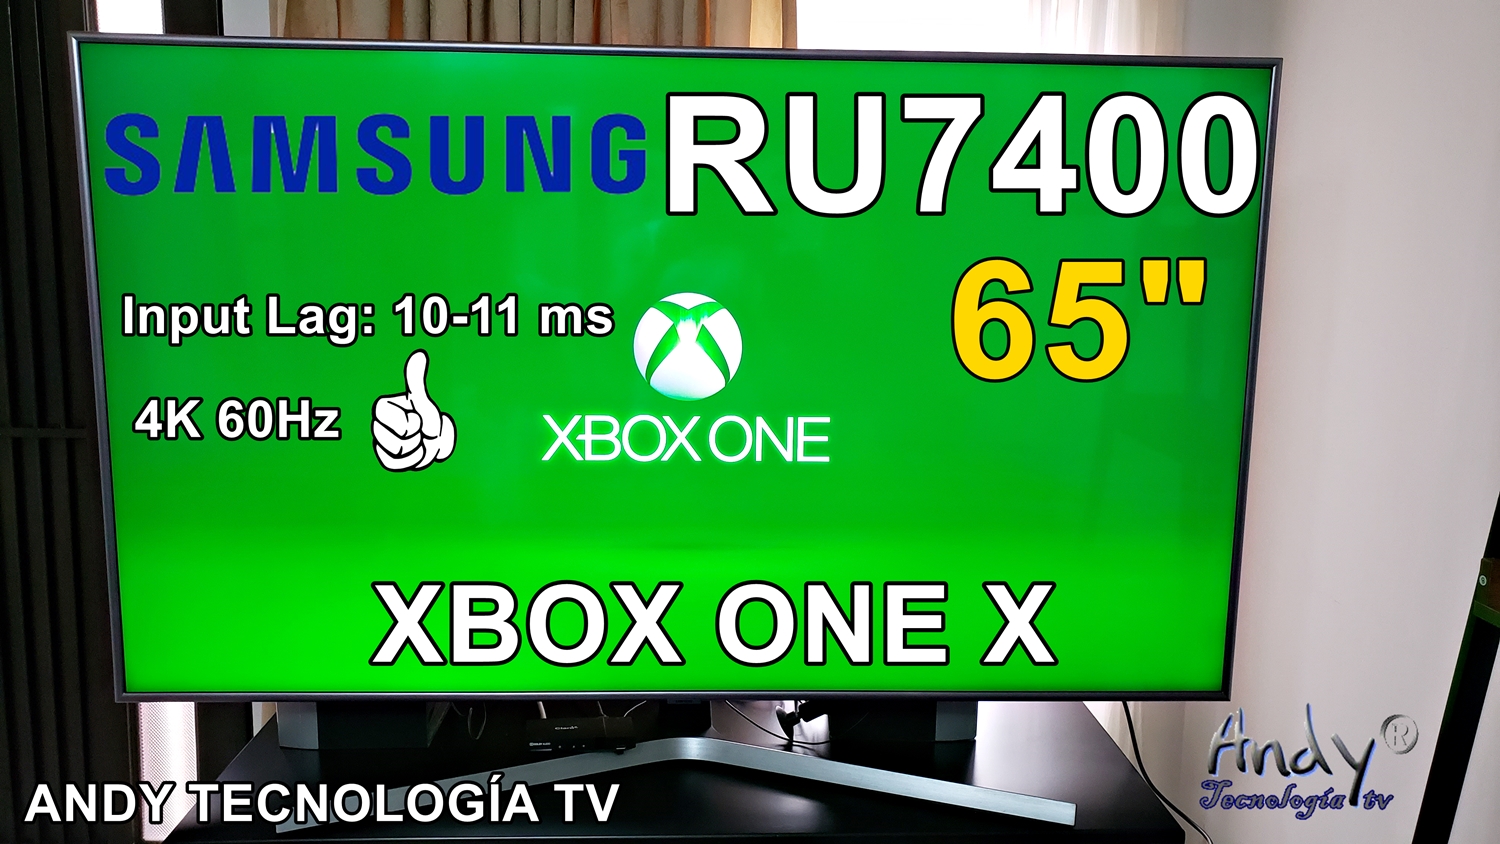 Samsung RU7400 Xbox One x prueba video juegos 4K HDR